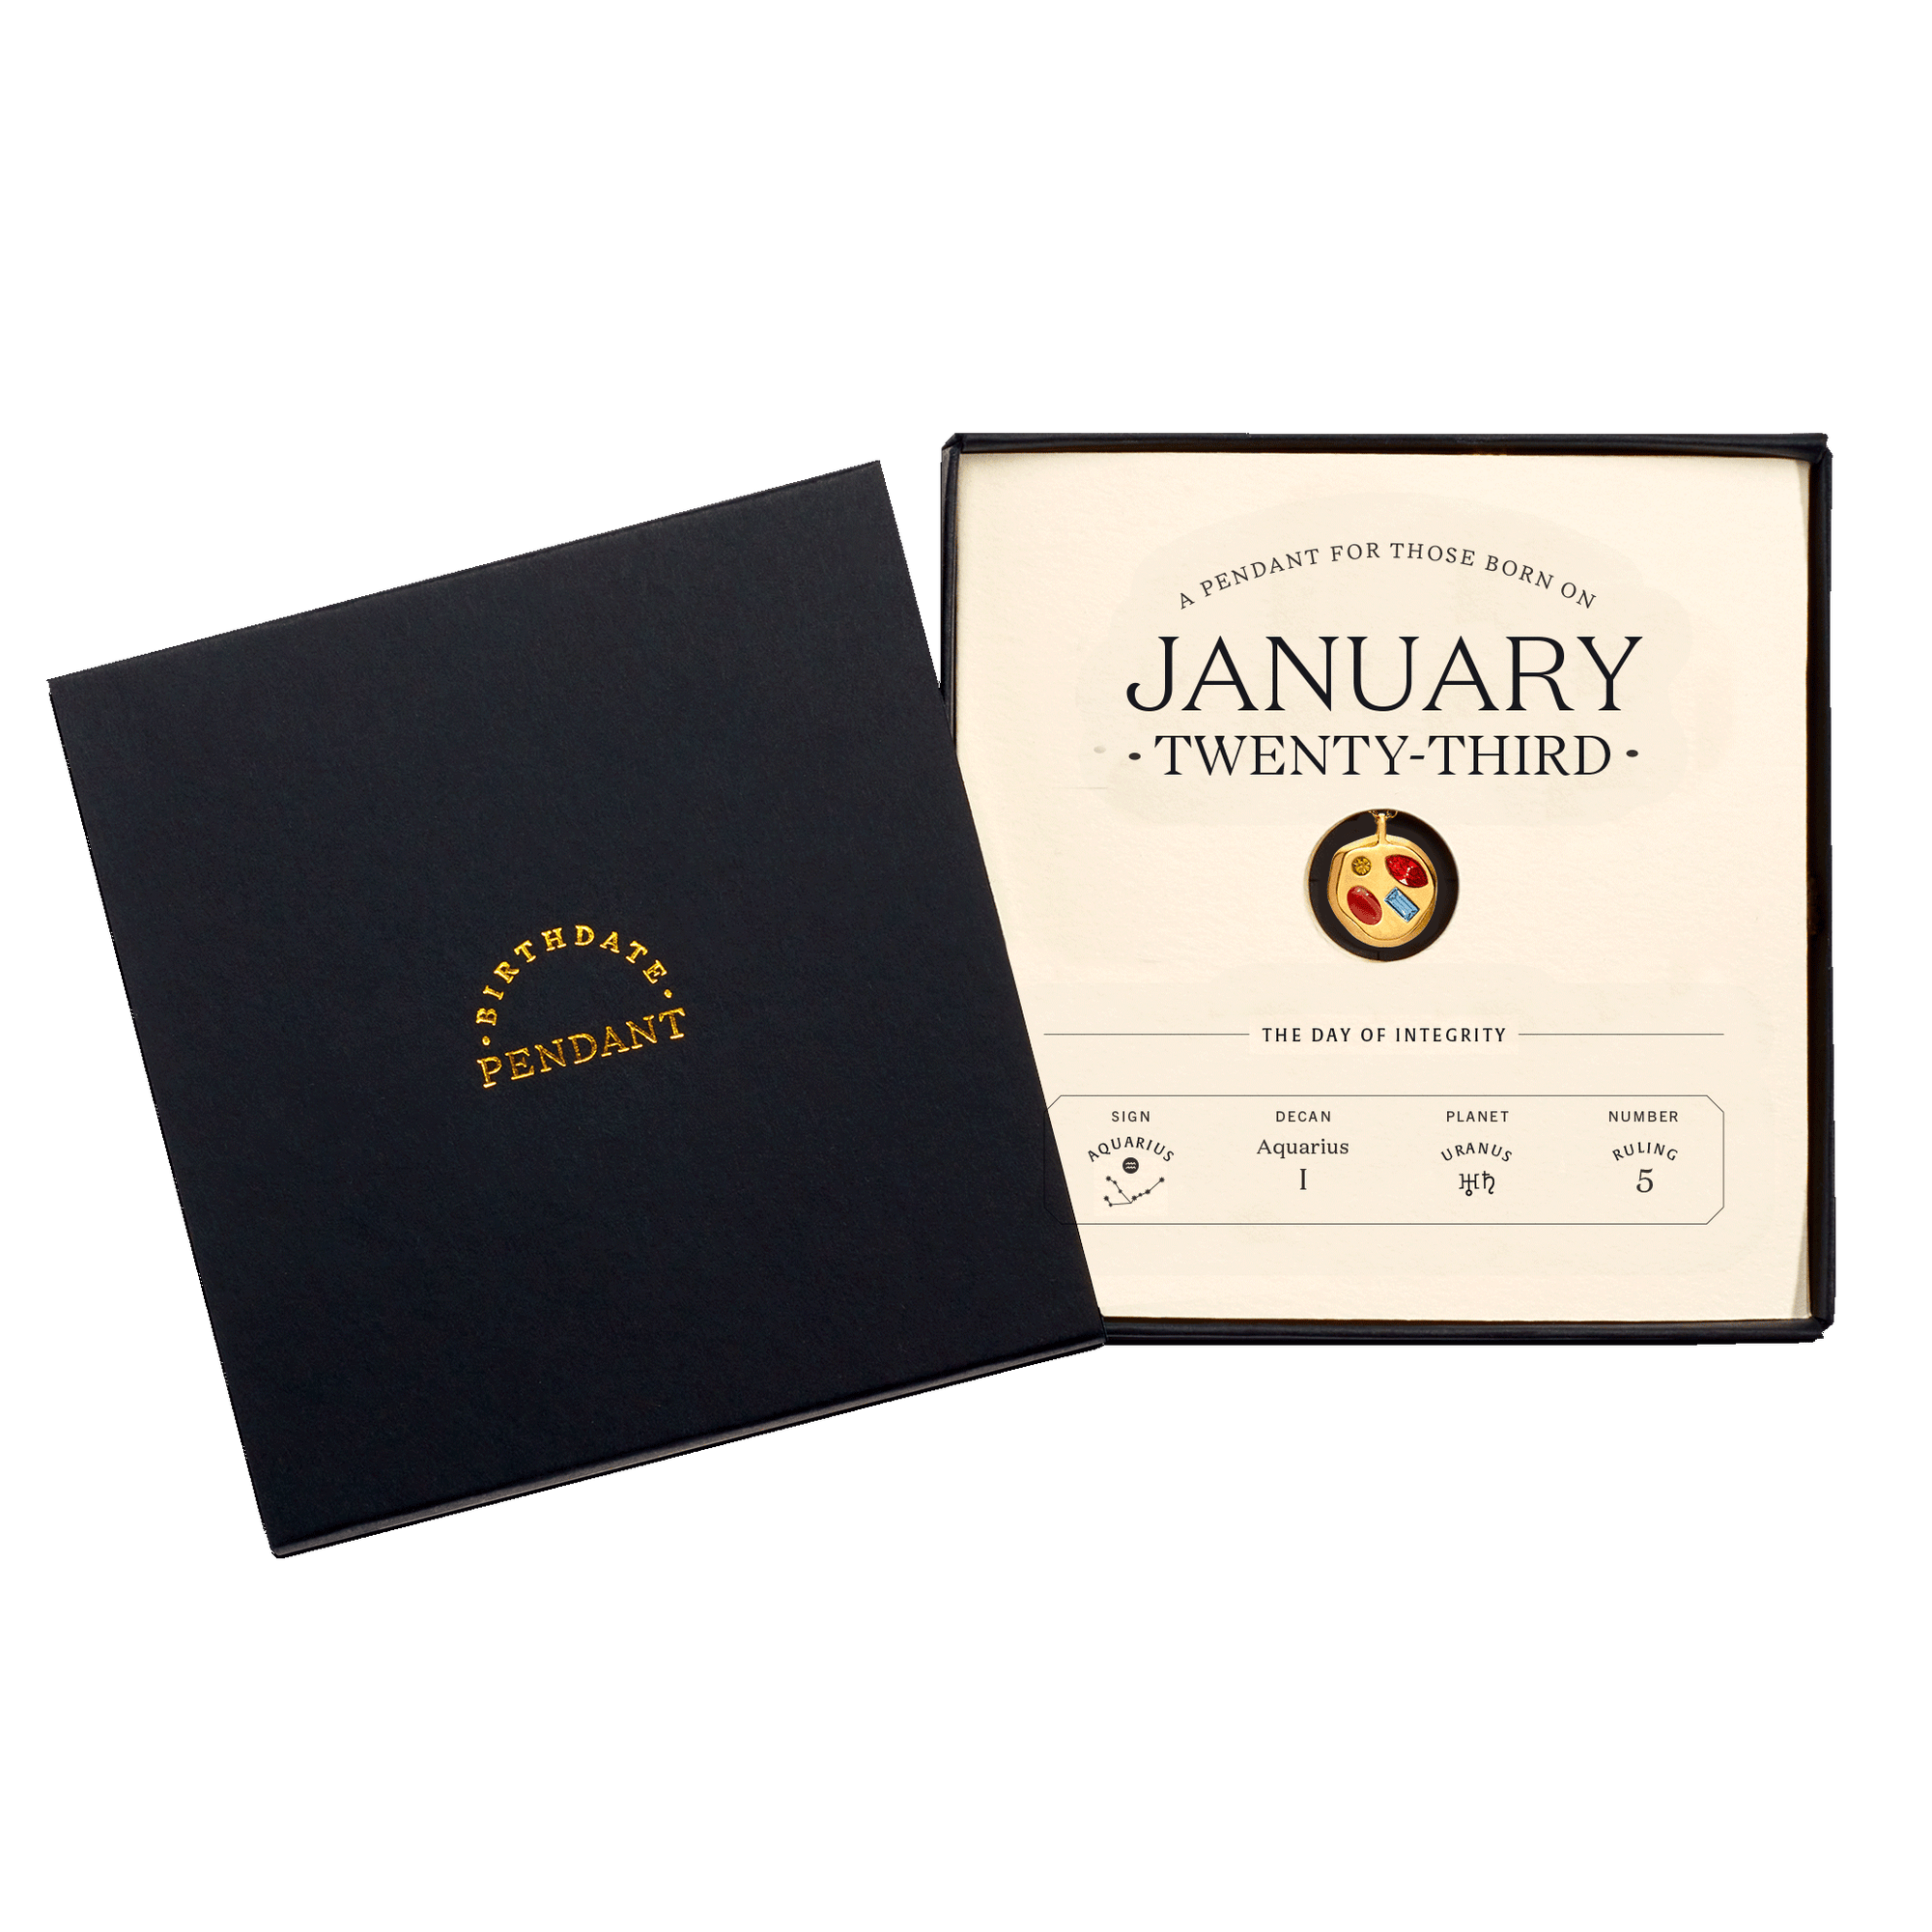 The January Twenty-Third Pendant inside its box